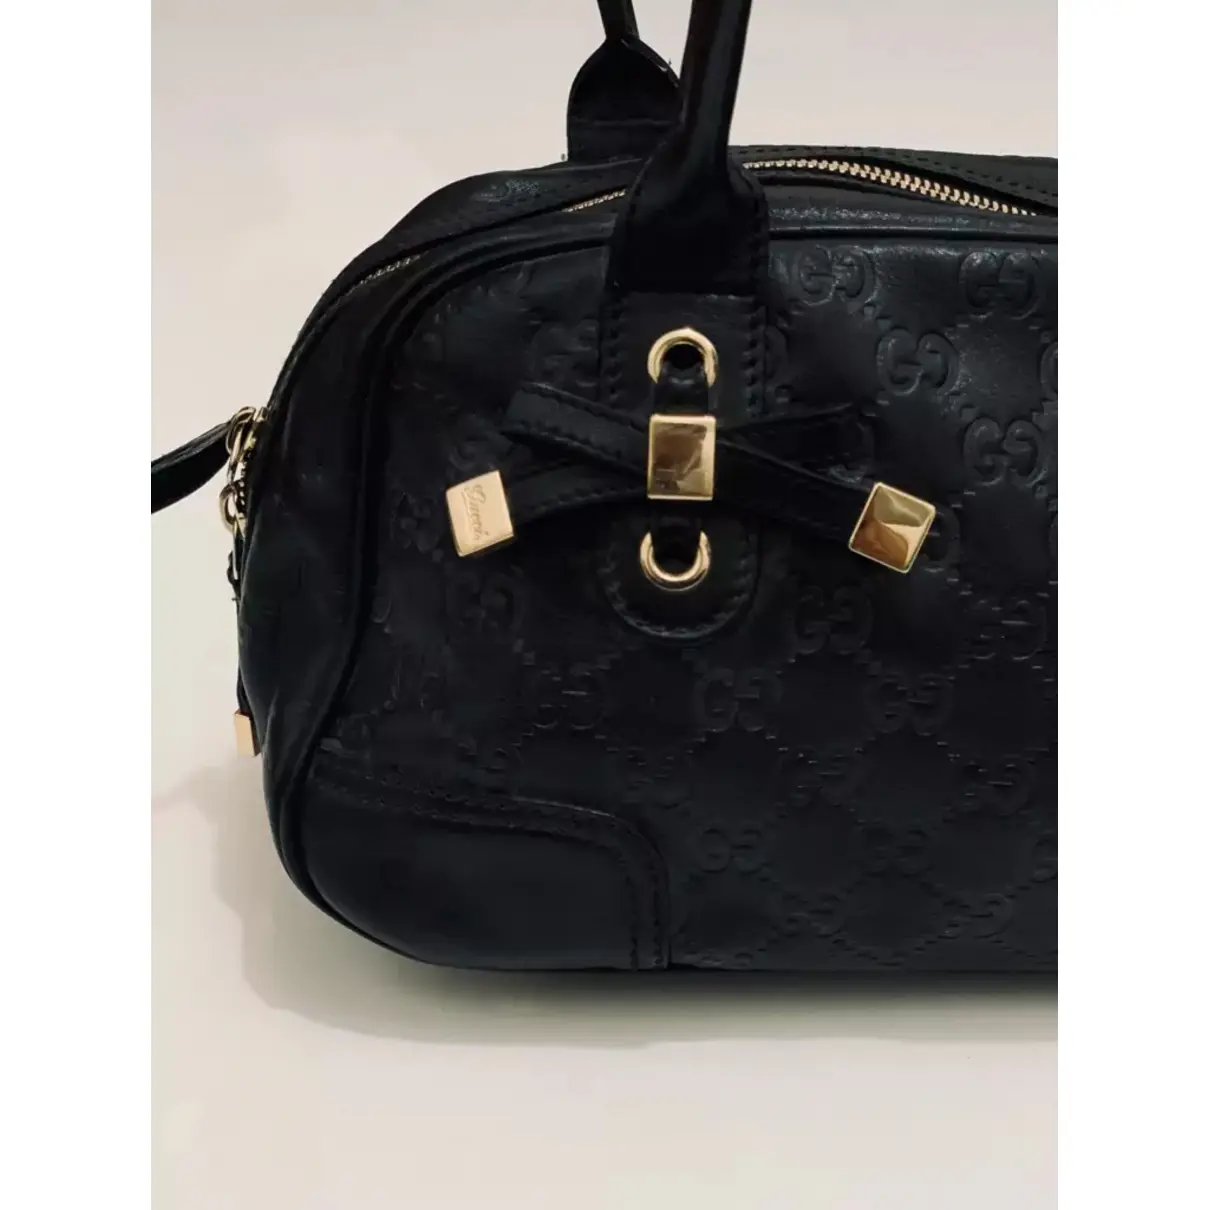 Buy Gucci Princy leather handbag online